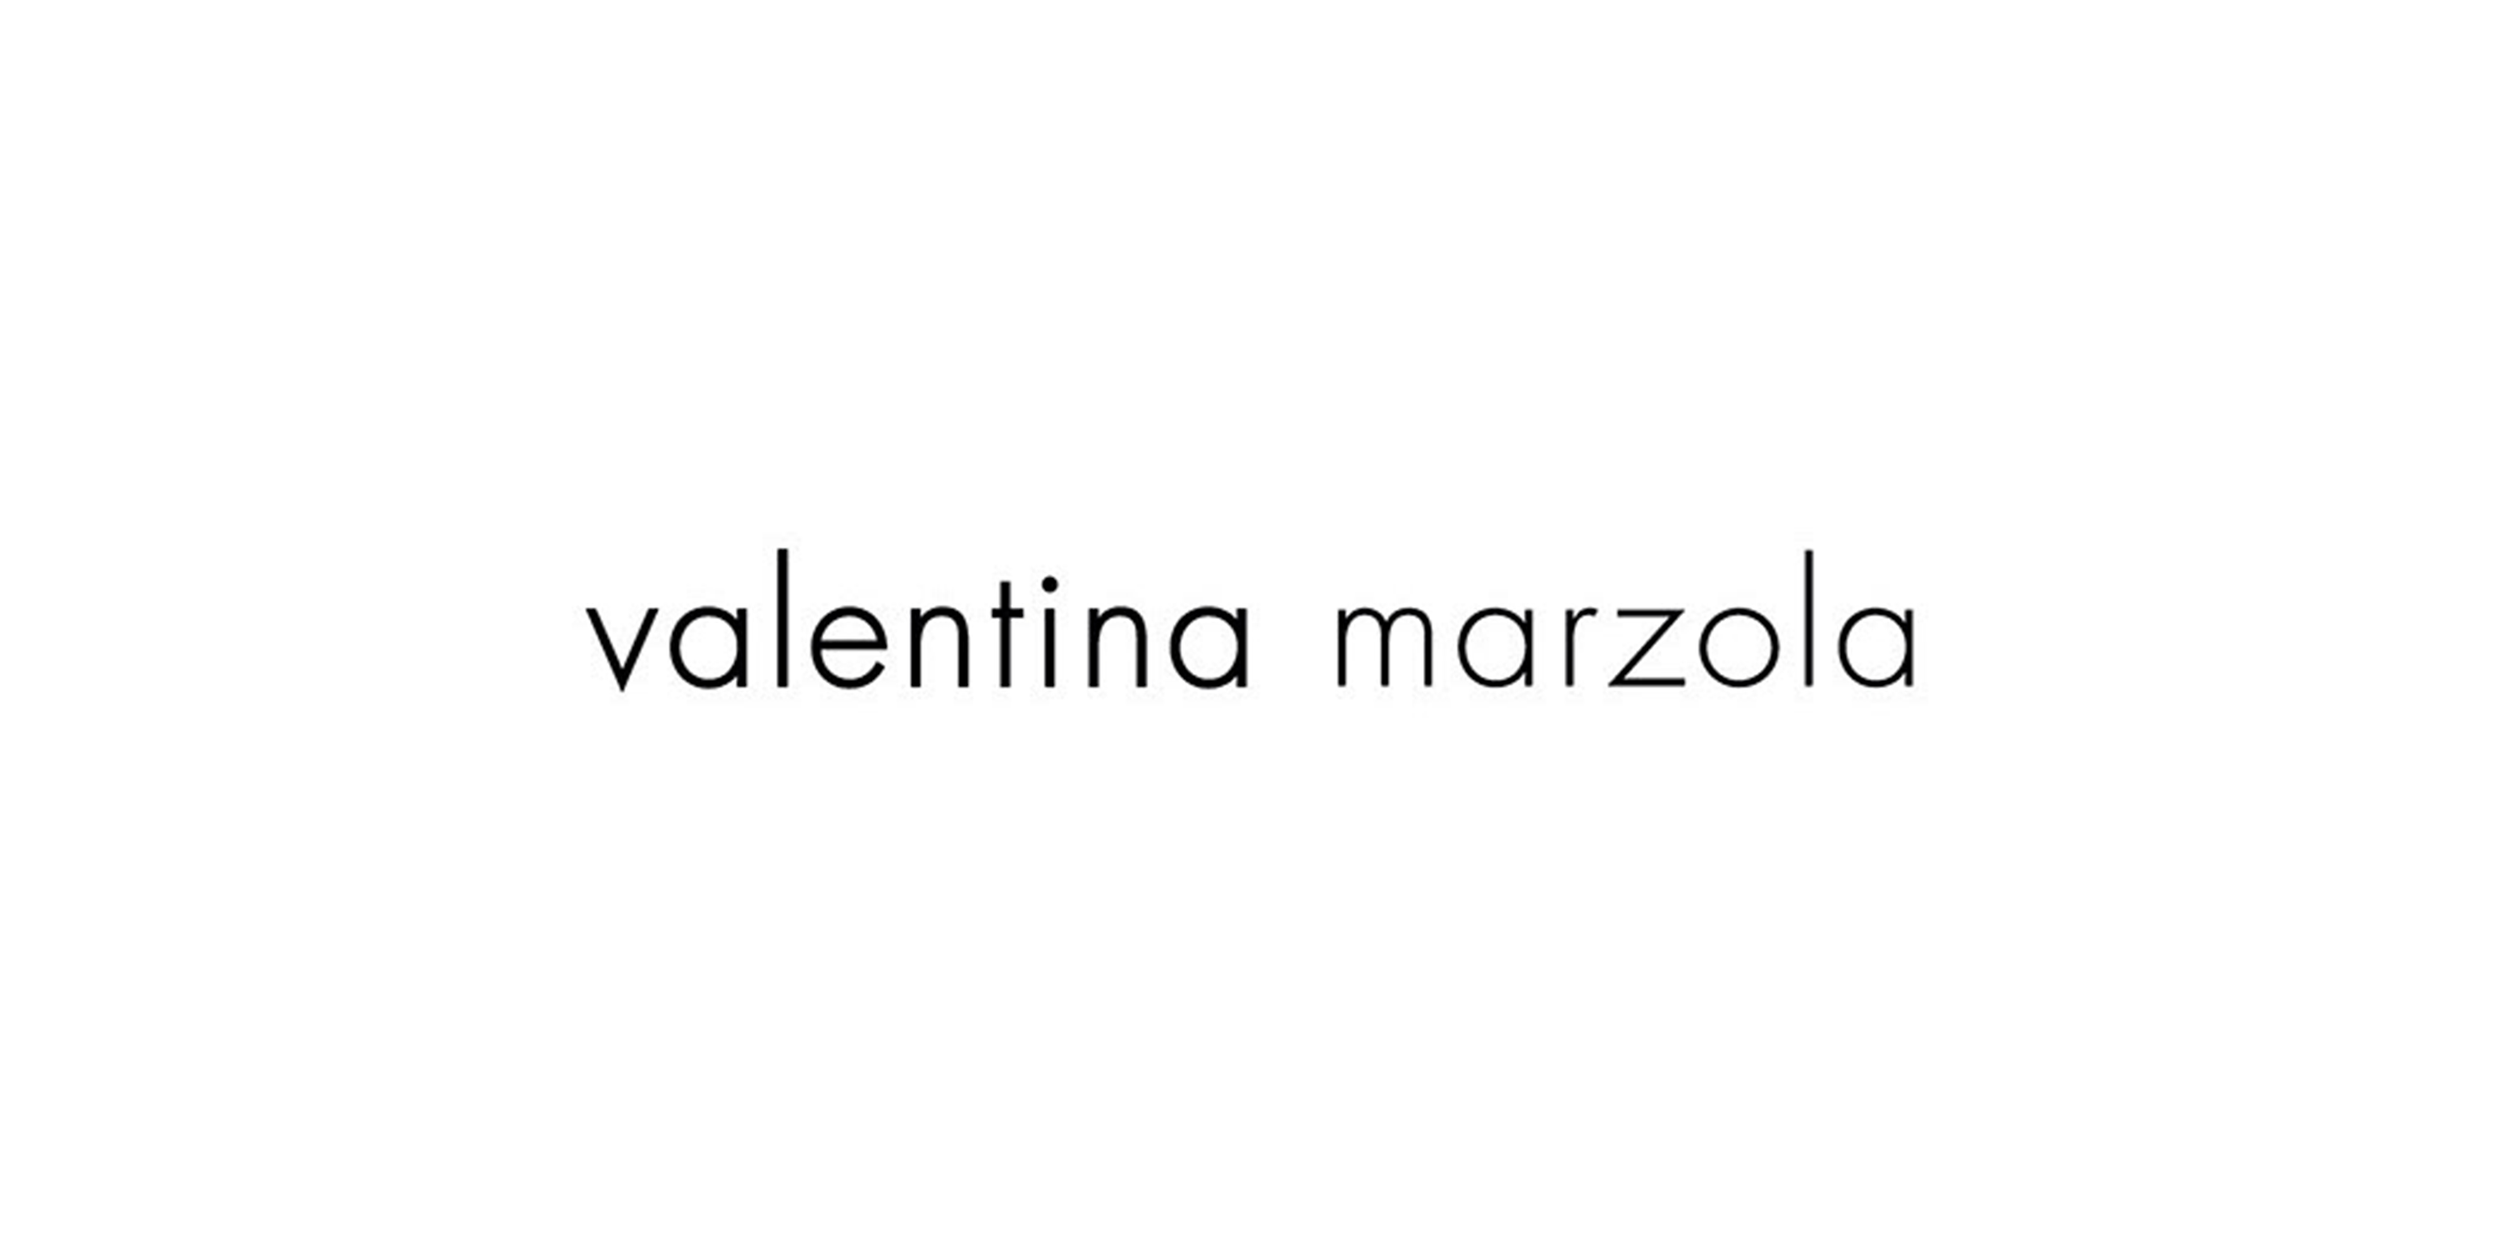 Valentina Marzola logo.png